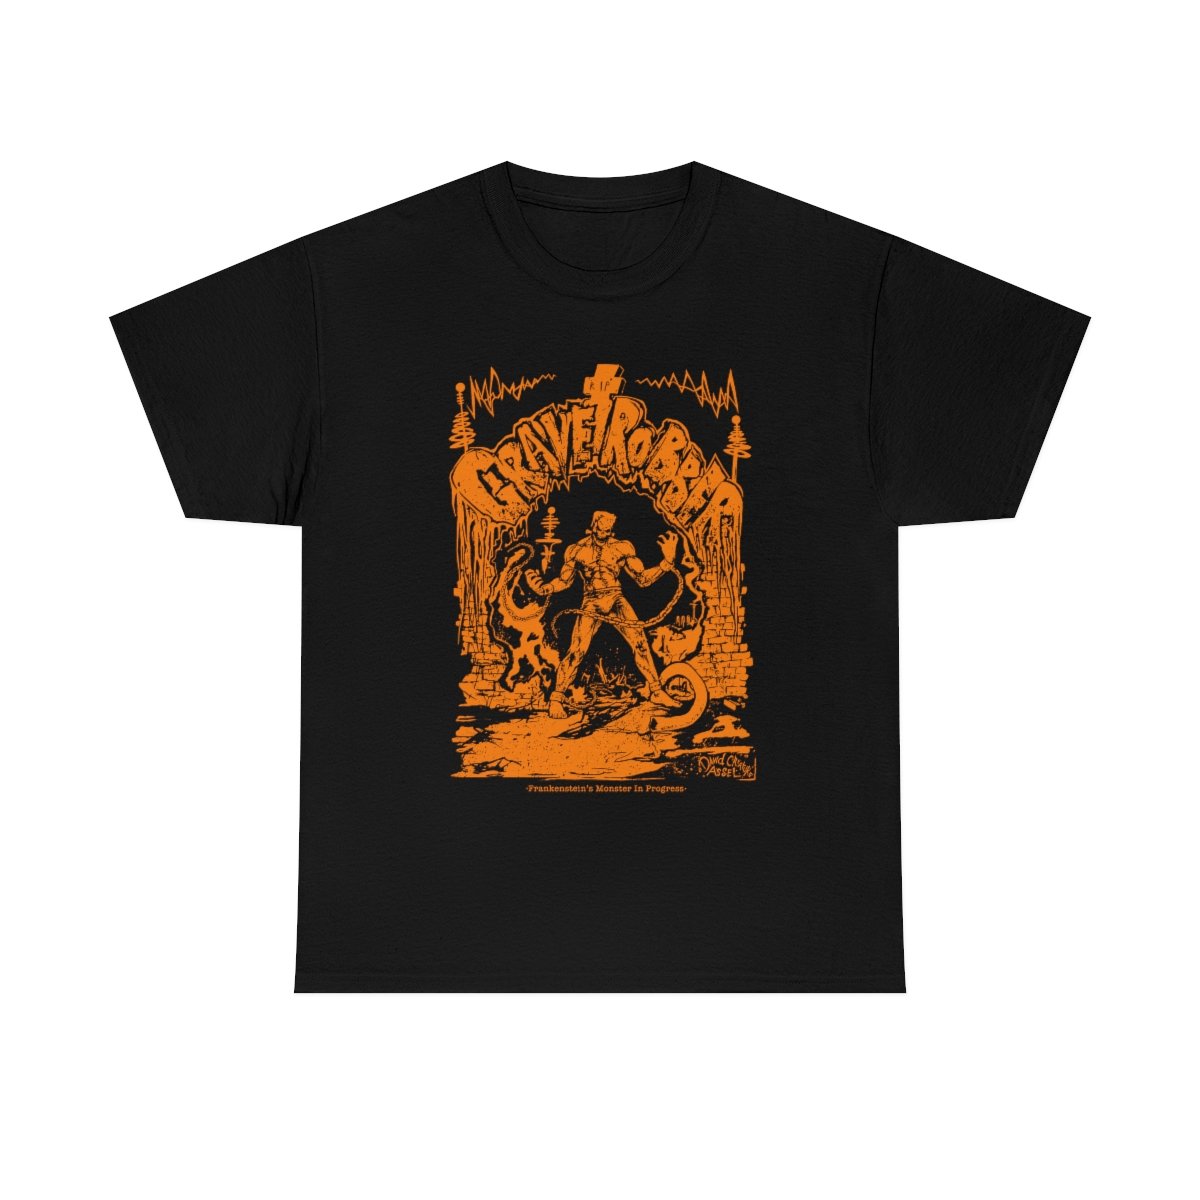 Grave Robber Monster in Progress (Limited Edition Orange) Short Sleeve Tshirt (5000)